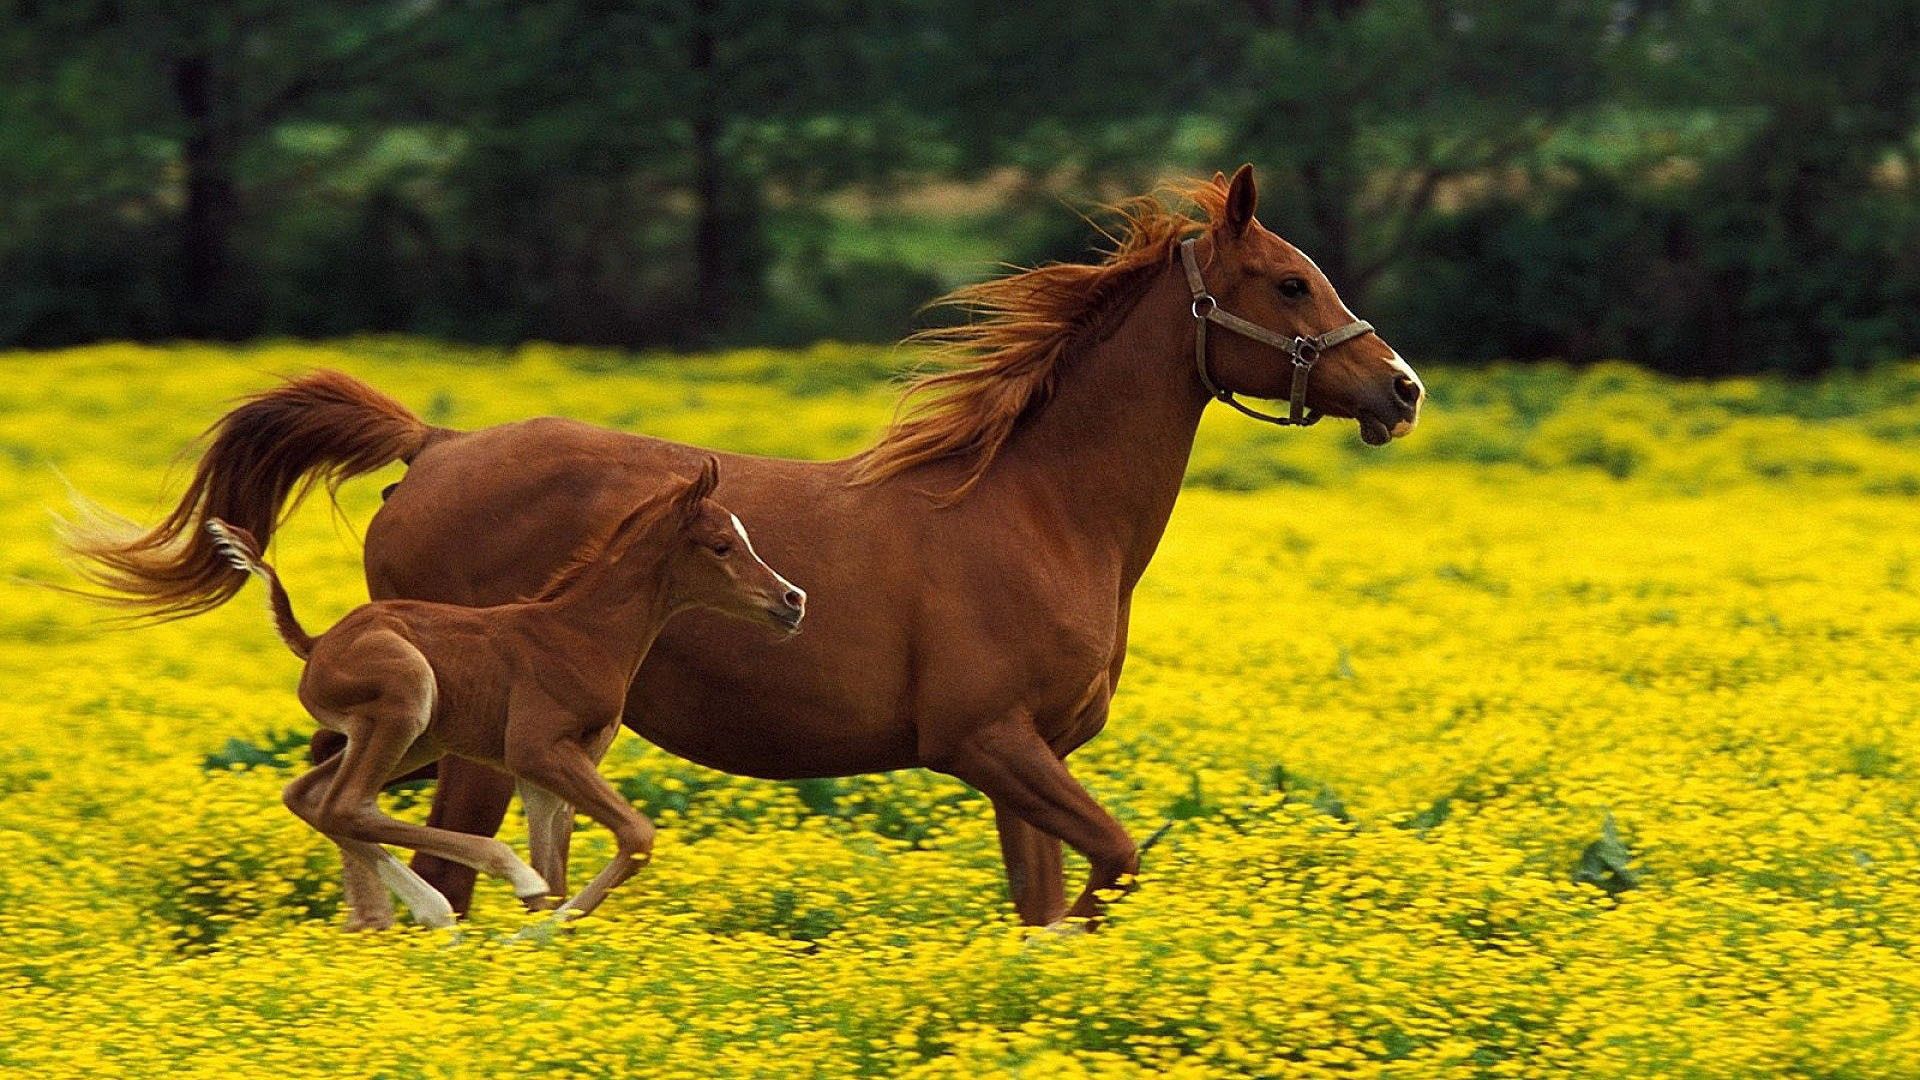 Best Horse Desktop Backgrounds